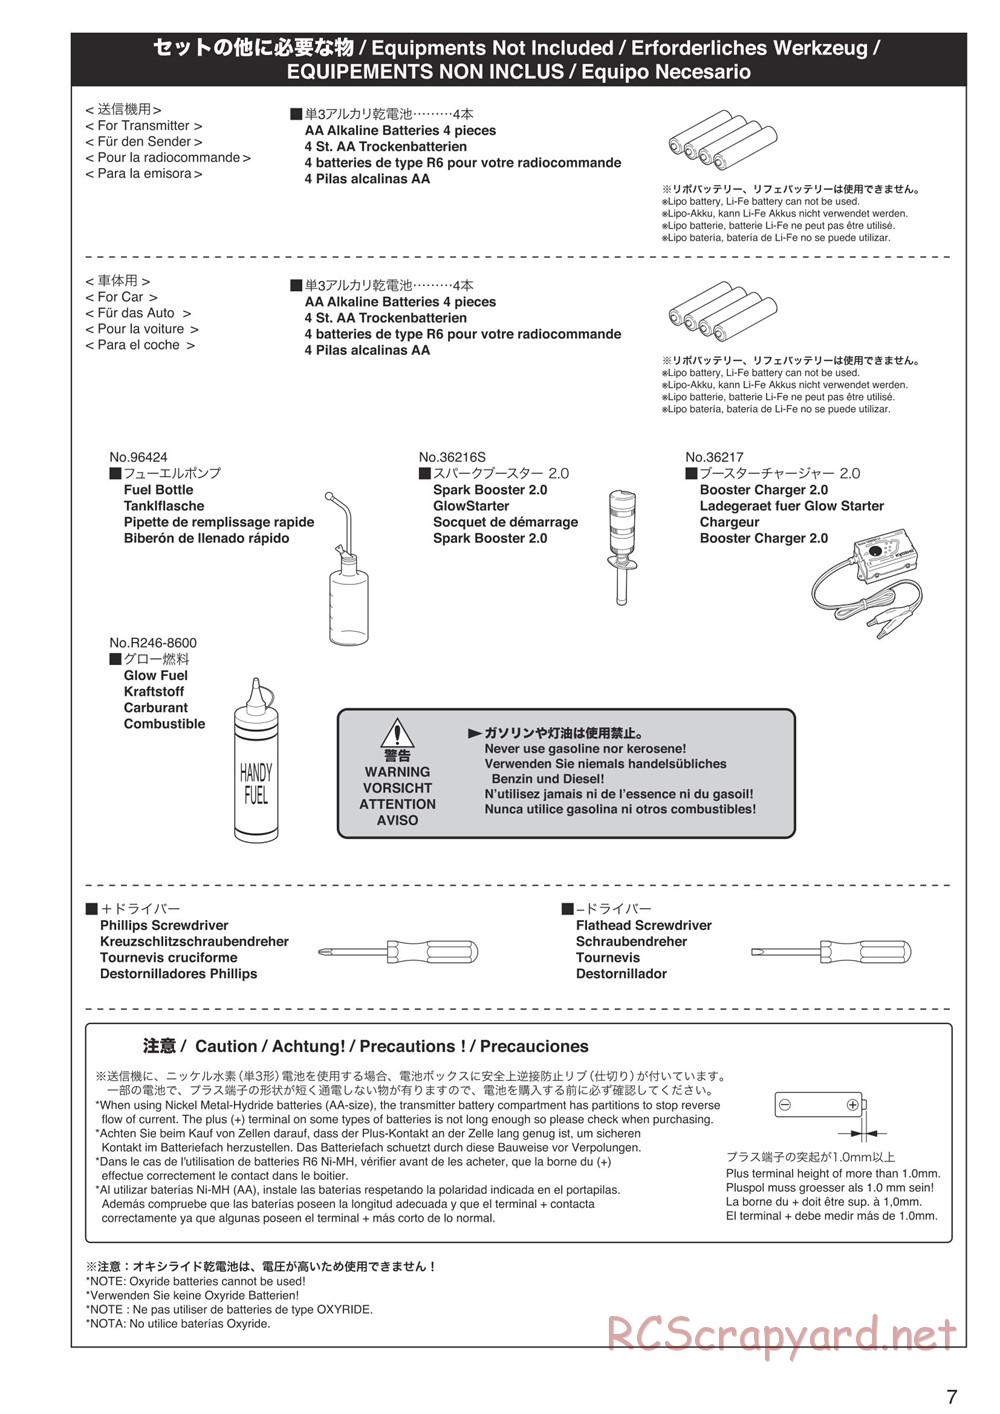 Kyosho - FO-XX 2.0 - Manual - Page 7